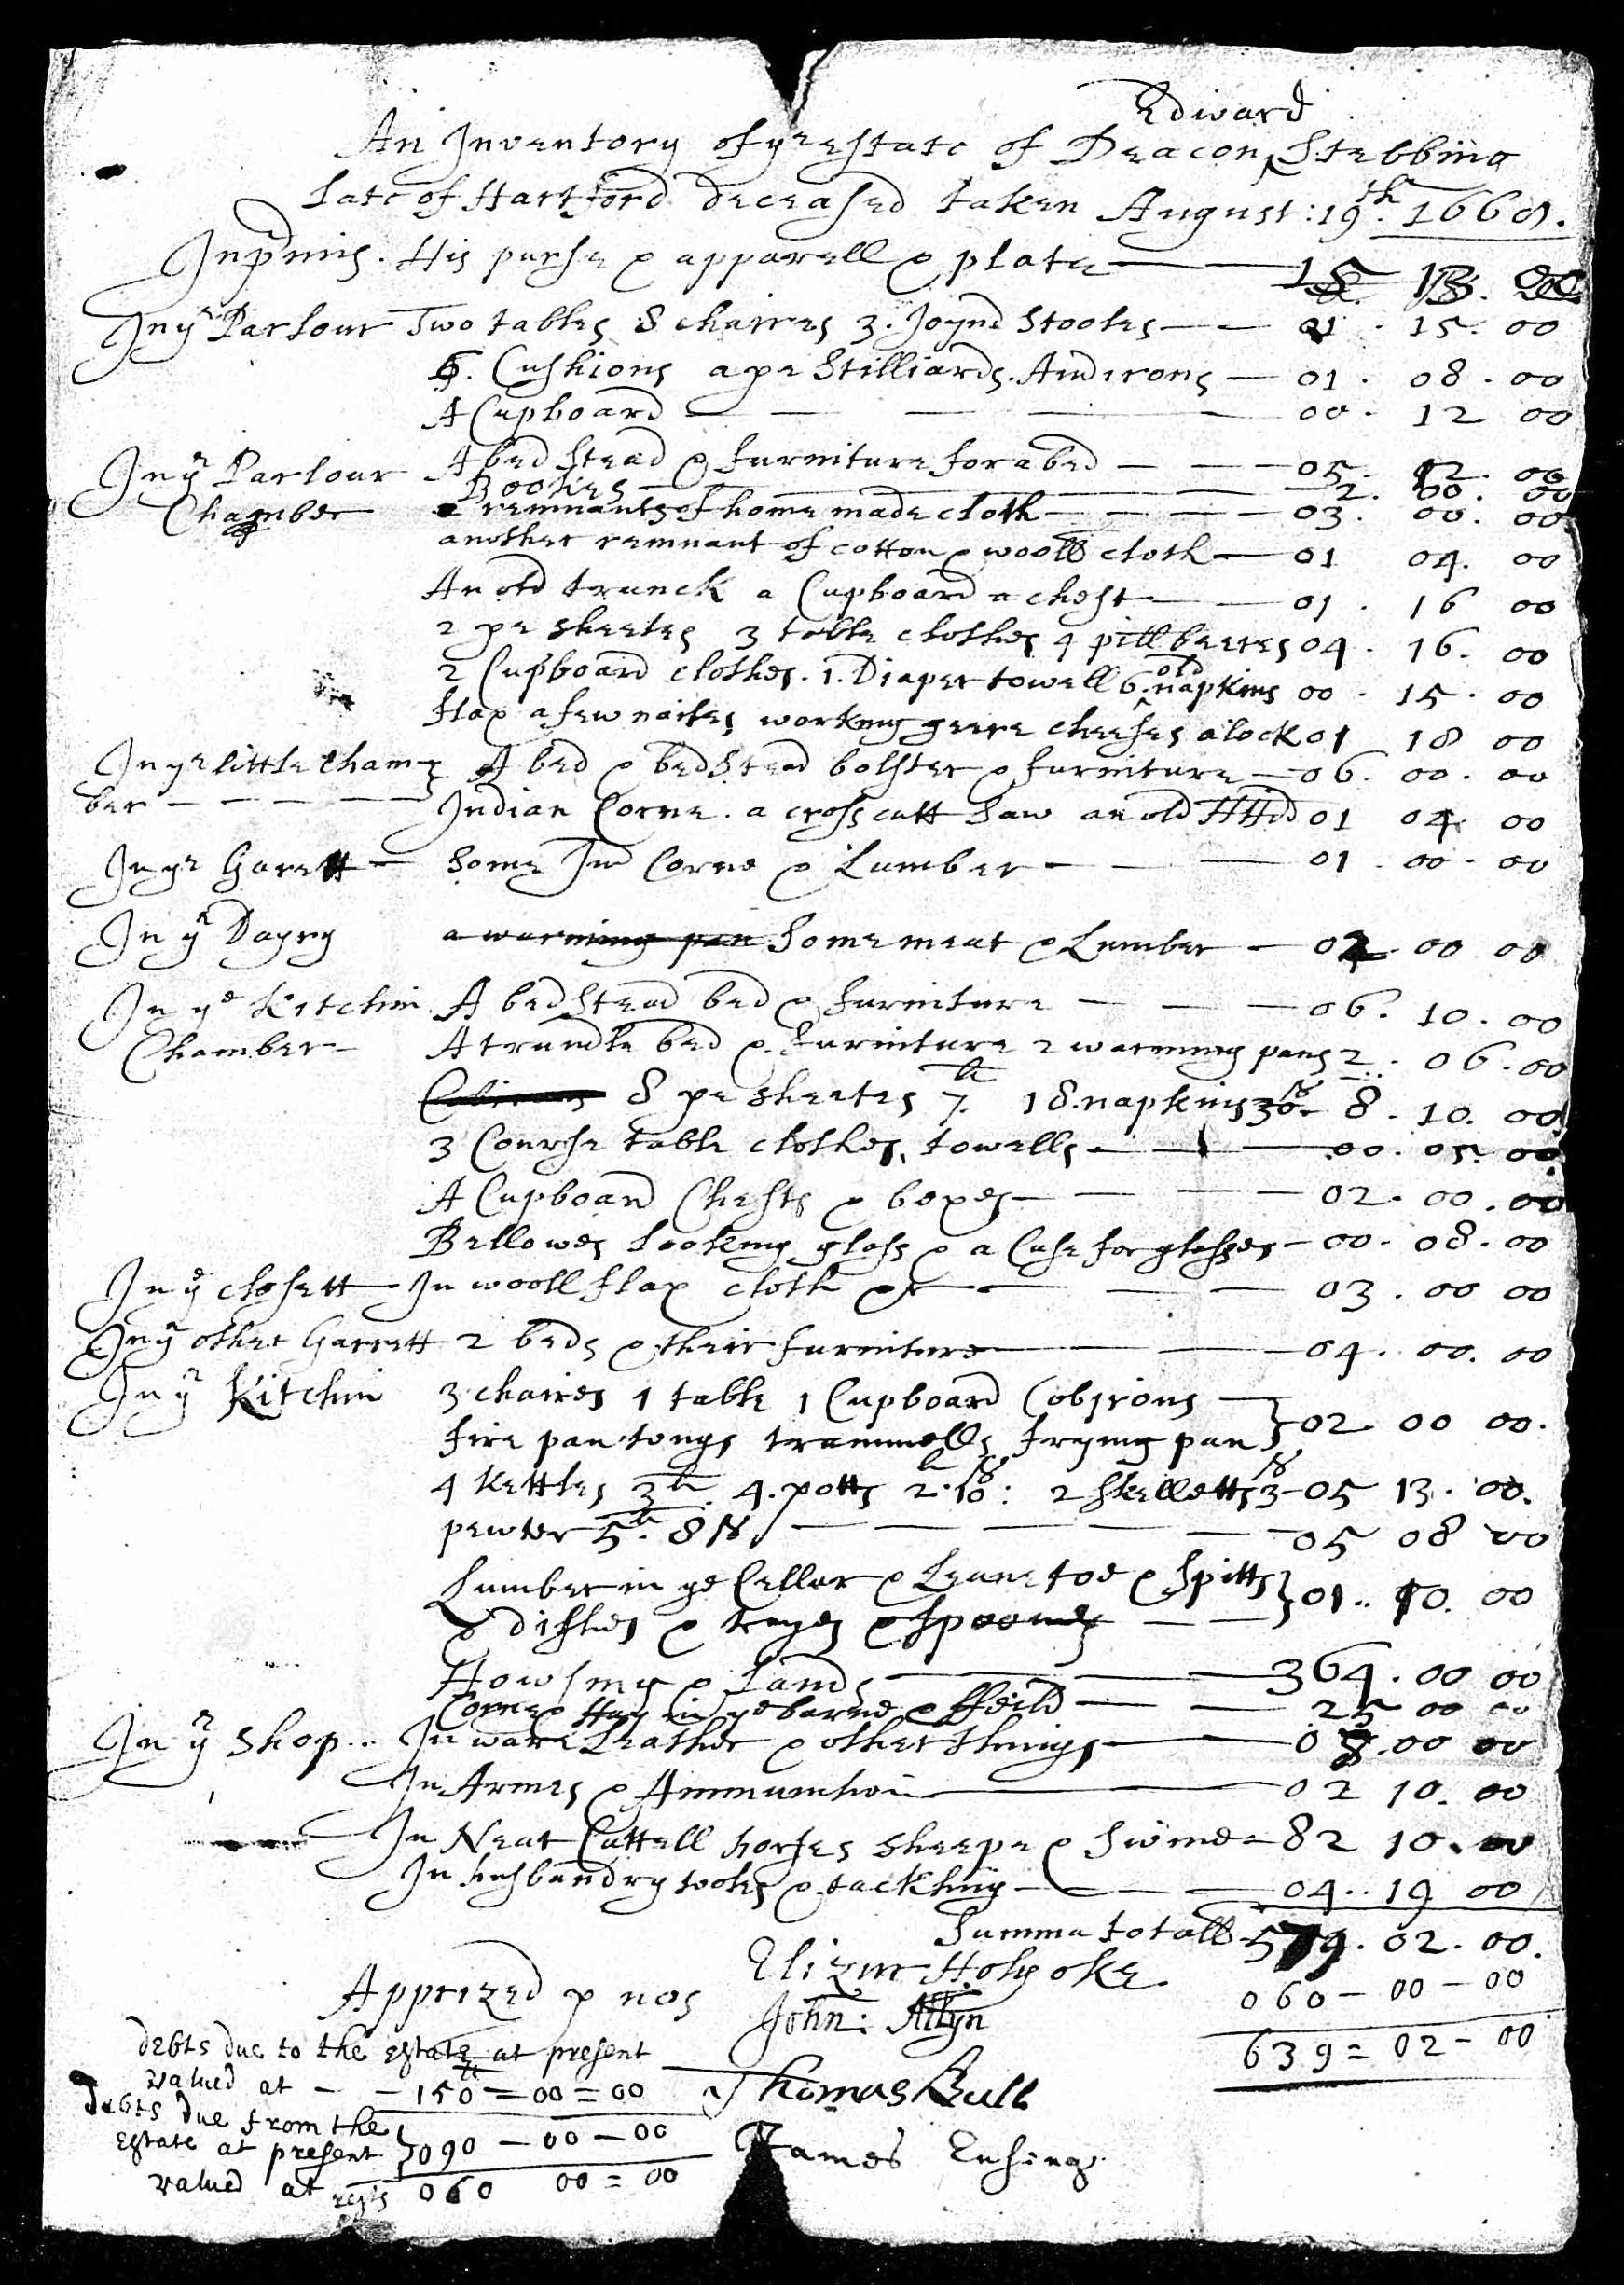 Inventory of Edward Stebbins's estate